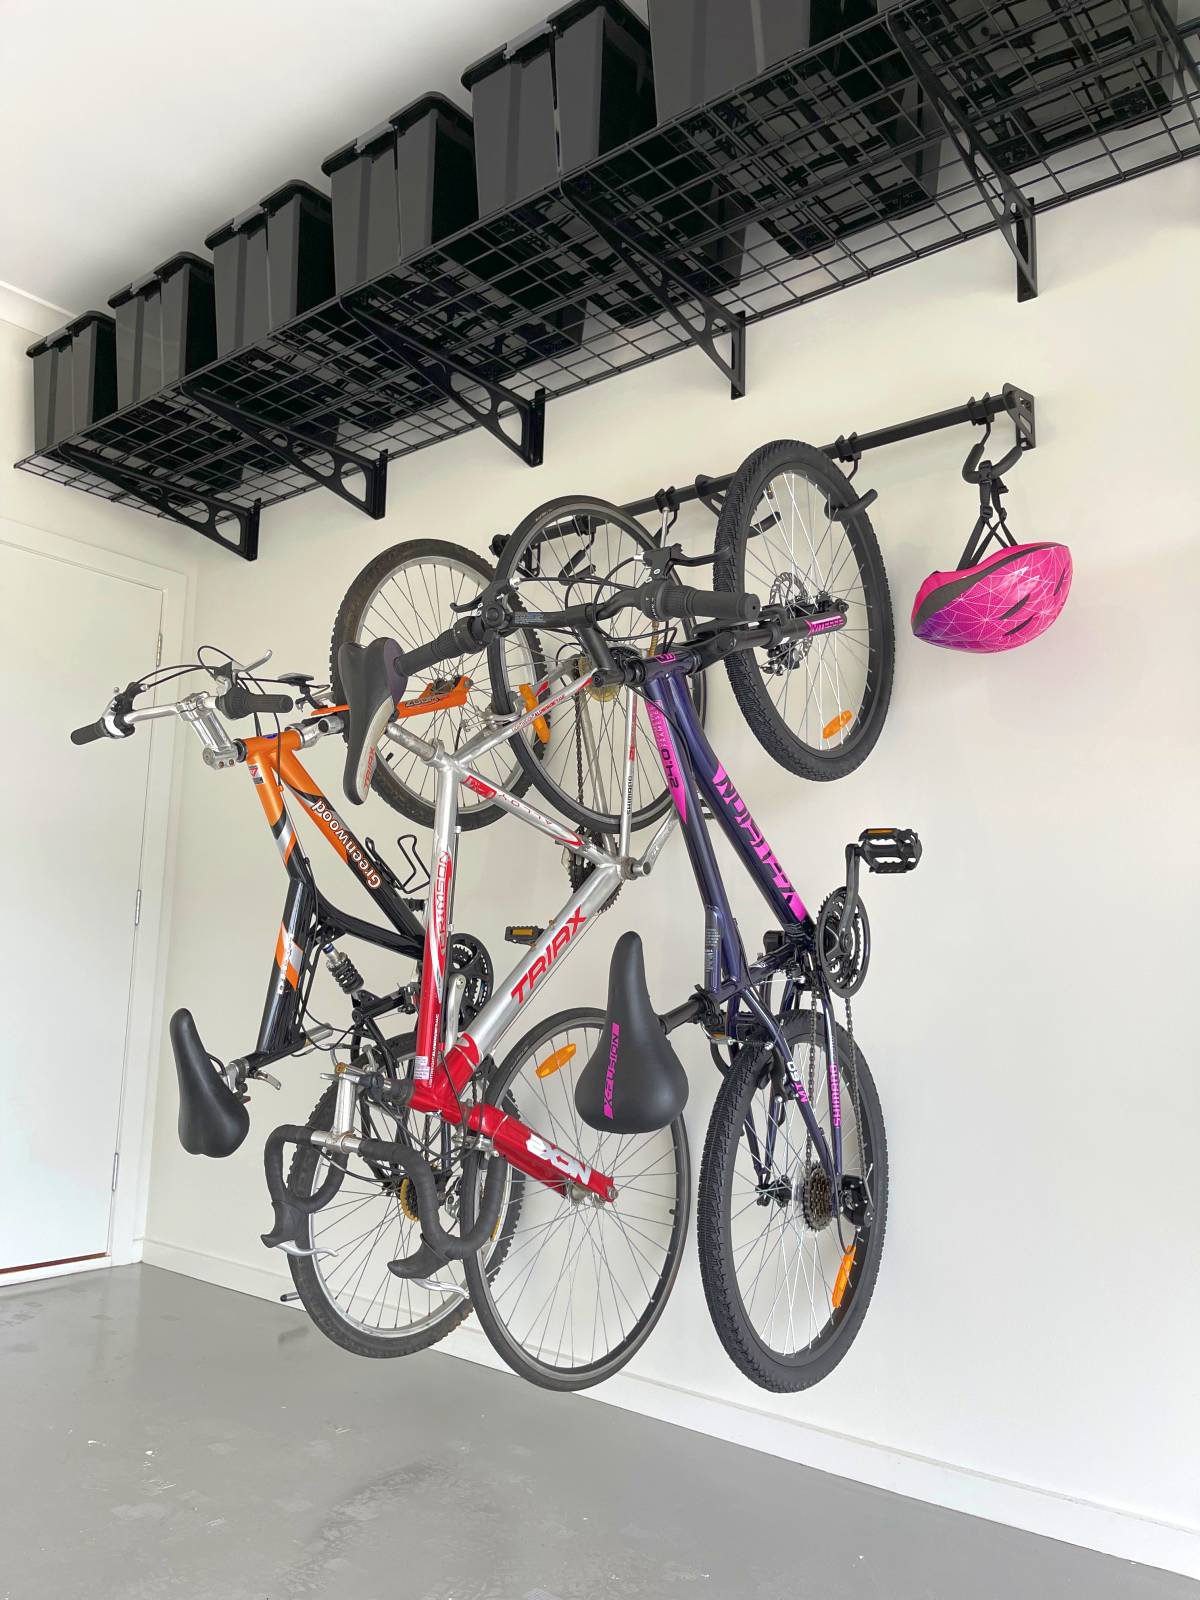 Dirza Bike Rack Garage 2 Pack Wall Mount Bike Hanger Bike Hooks